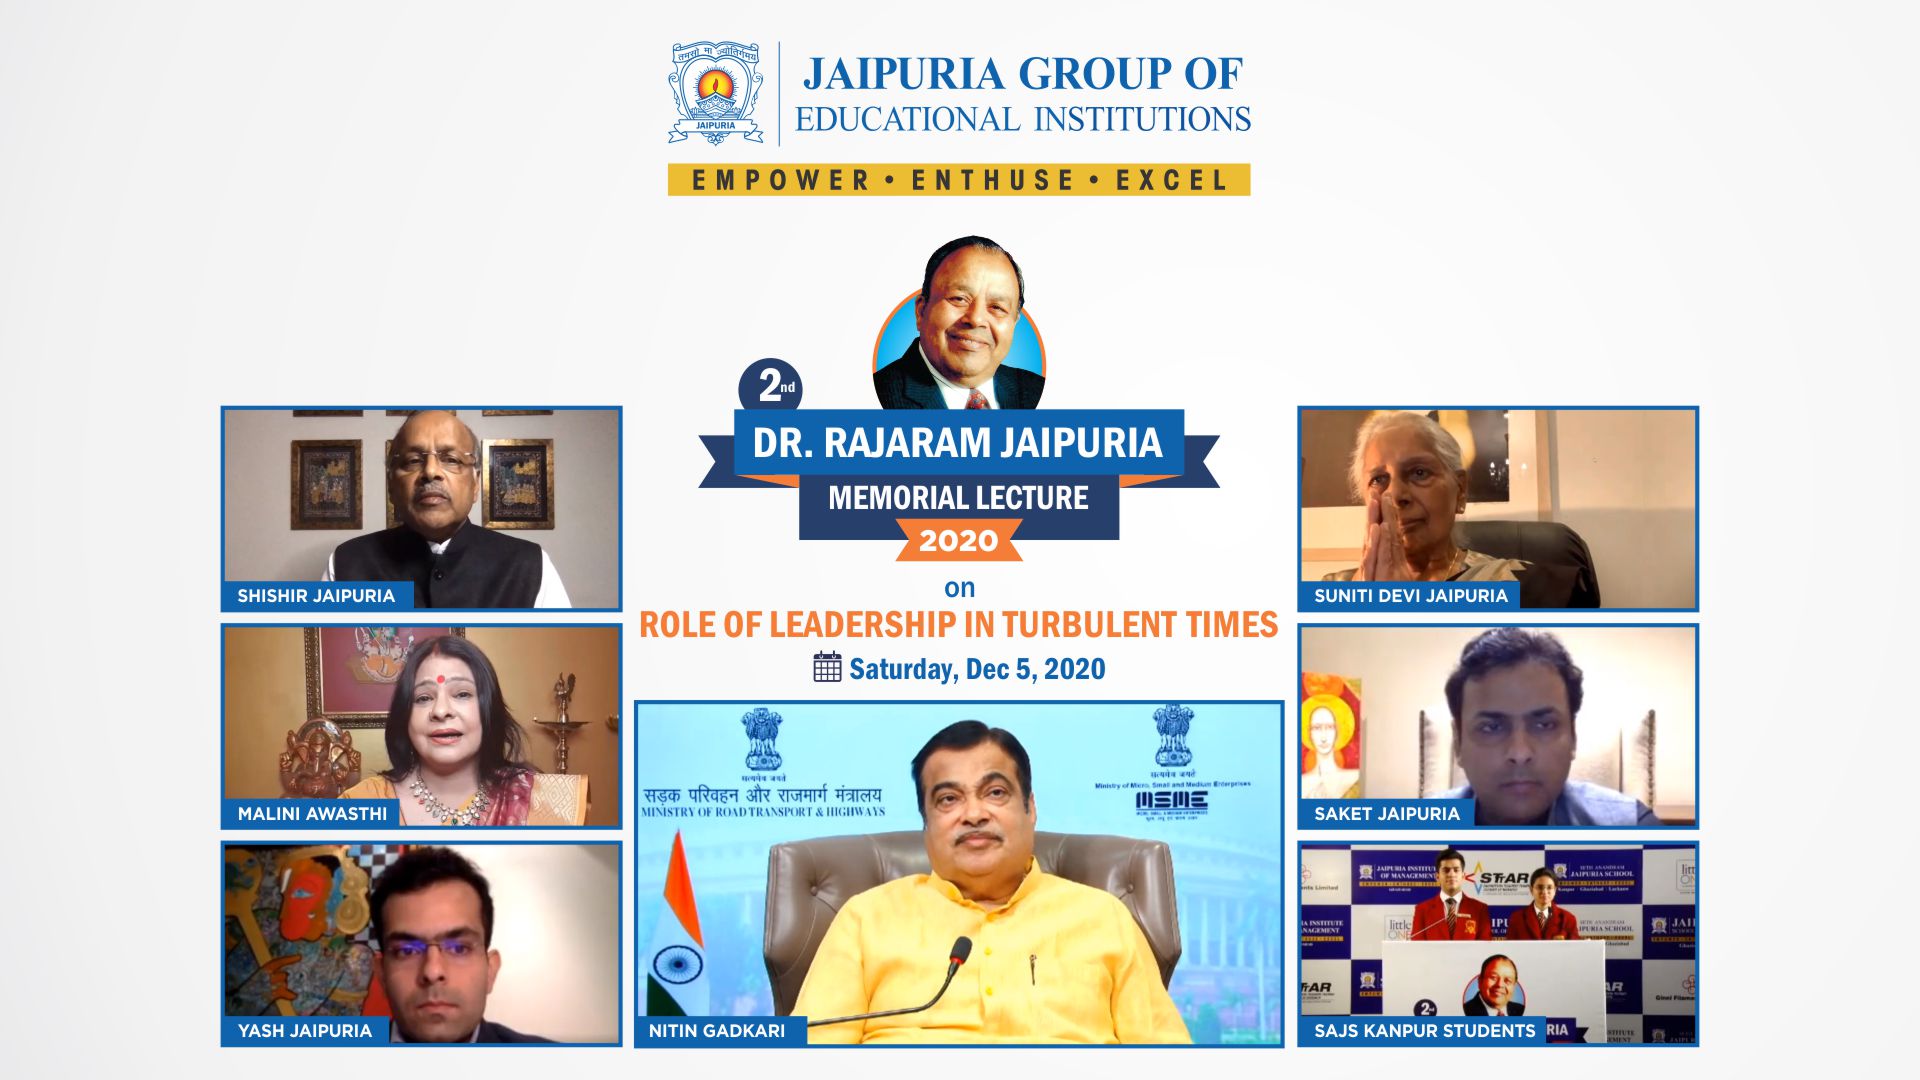 Nitin Gadkari’s ,inspiring speech on leadership,2nd Dr. Rajaram Jaipuria ,Memorial Lecture has many takeaways